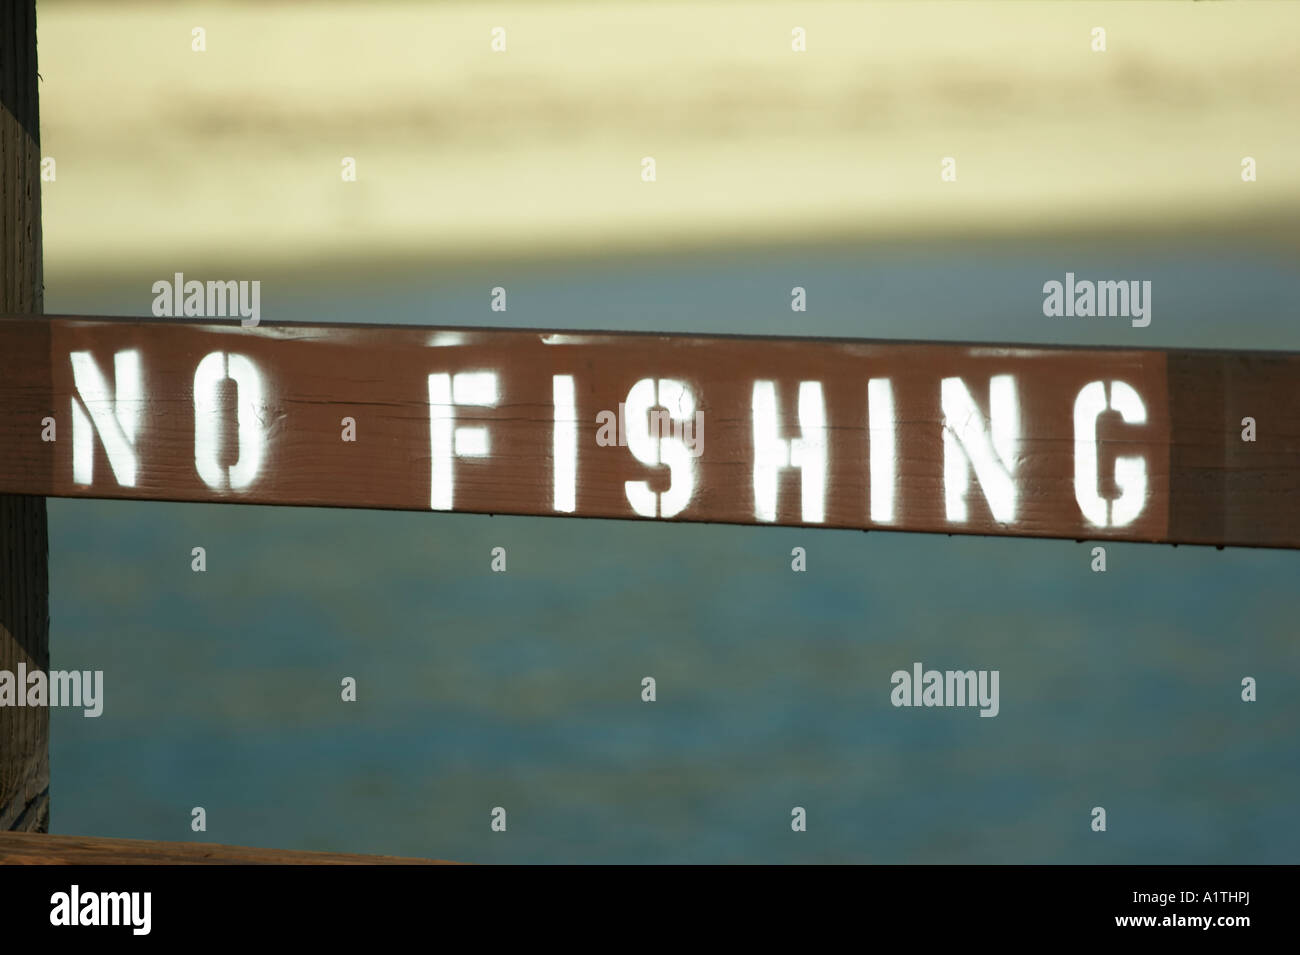 Road Sign - NO FISHING Stock Photo - Alamy